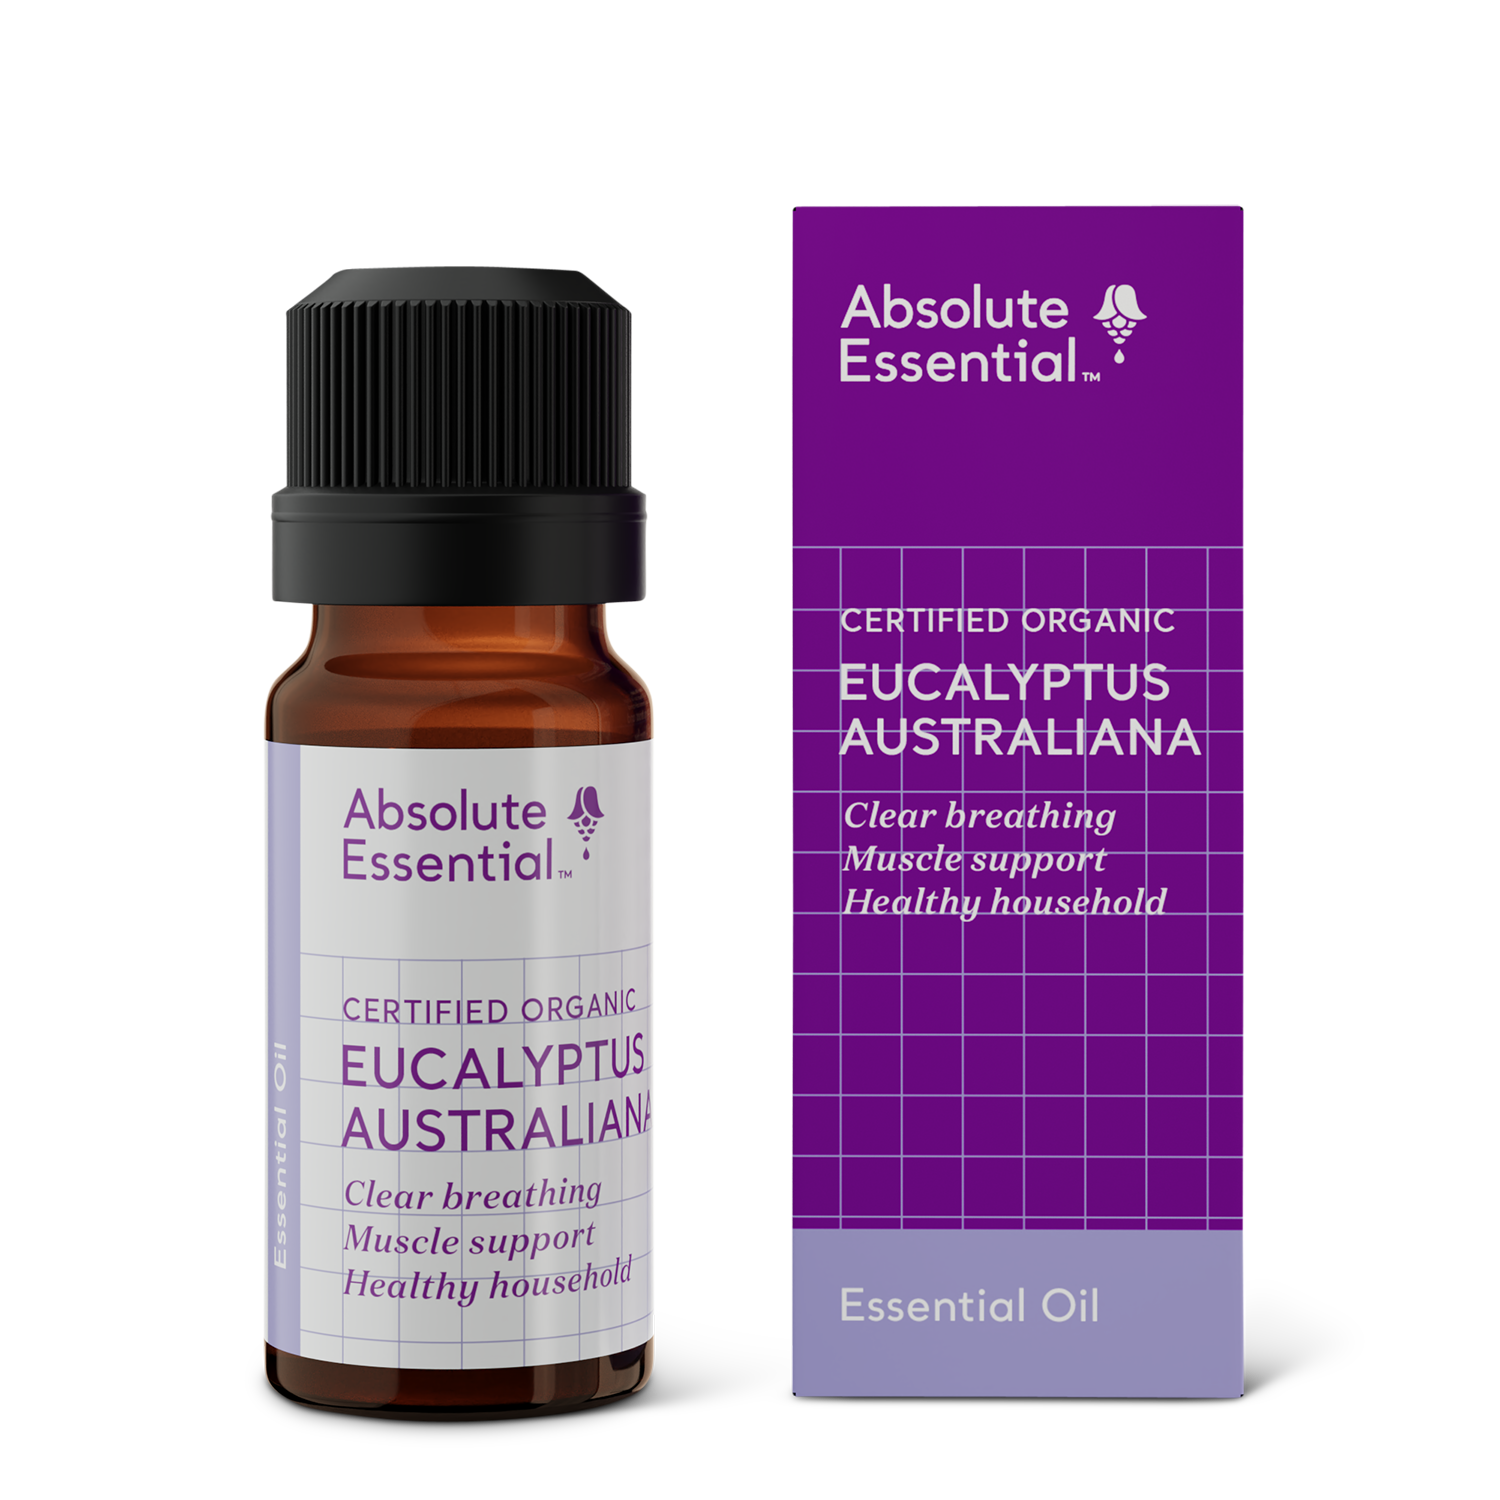 Absolute Essential - Eucalyptus Australiana Oil - Urban Naturals